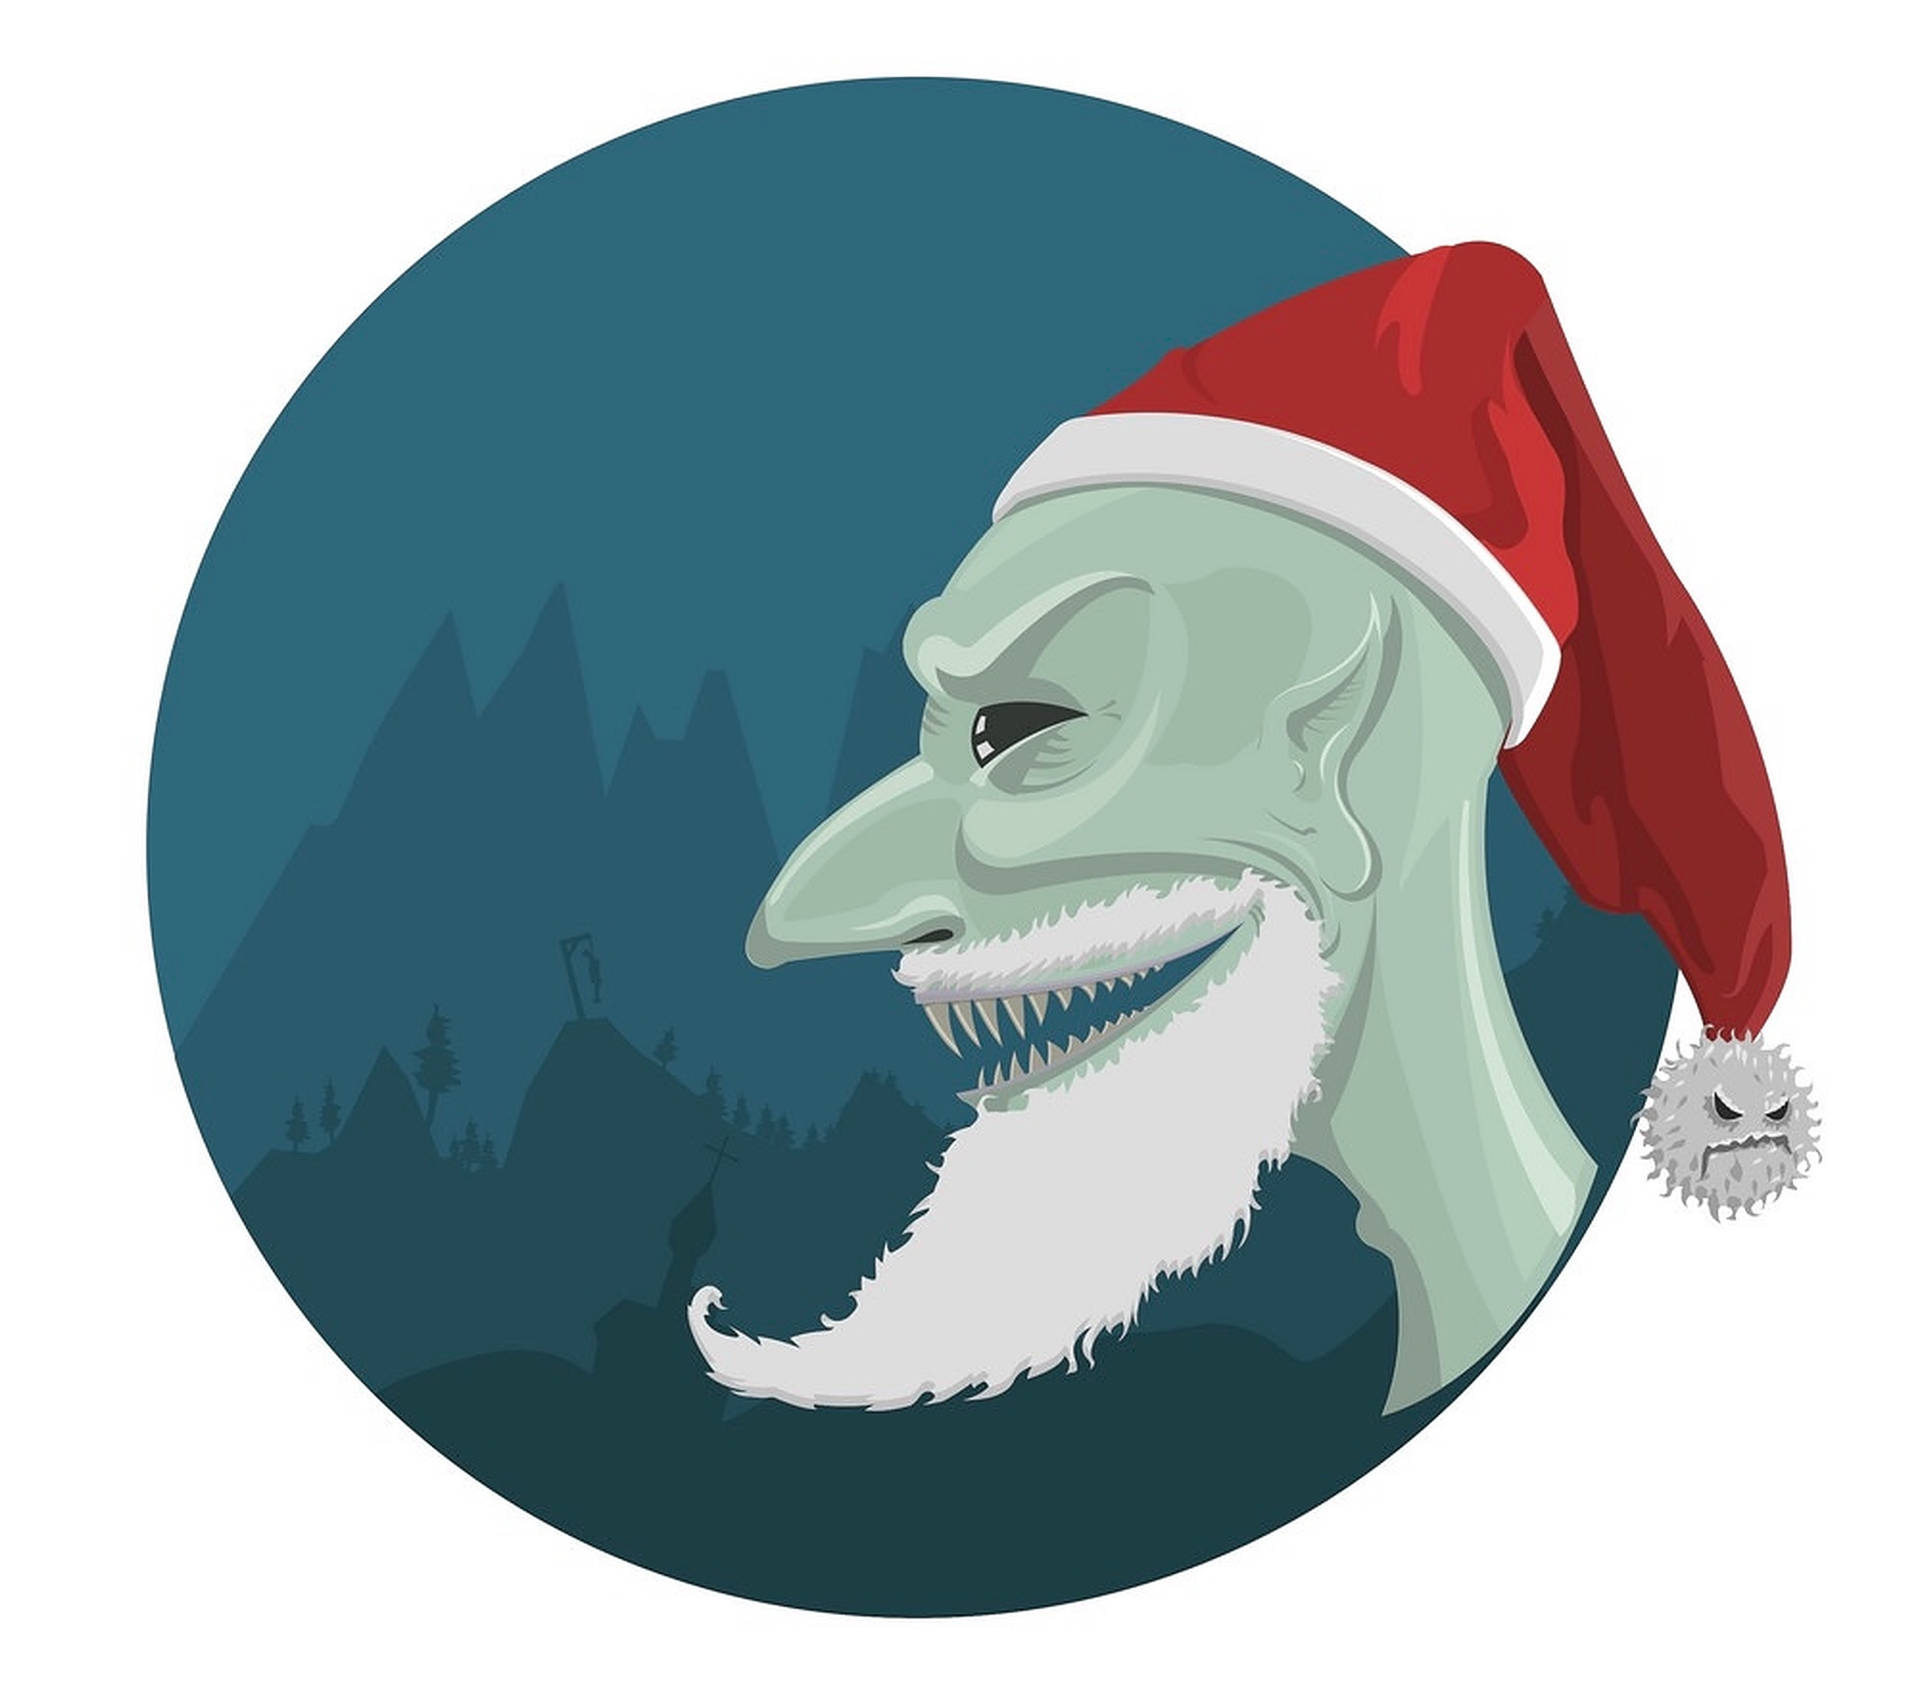 Evil Monster In Santa’s Hat Wallpaper